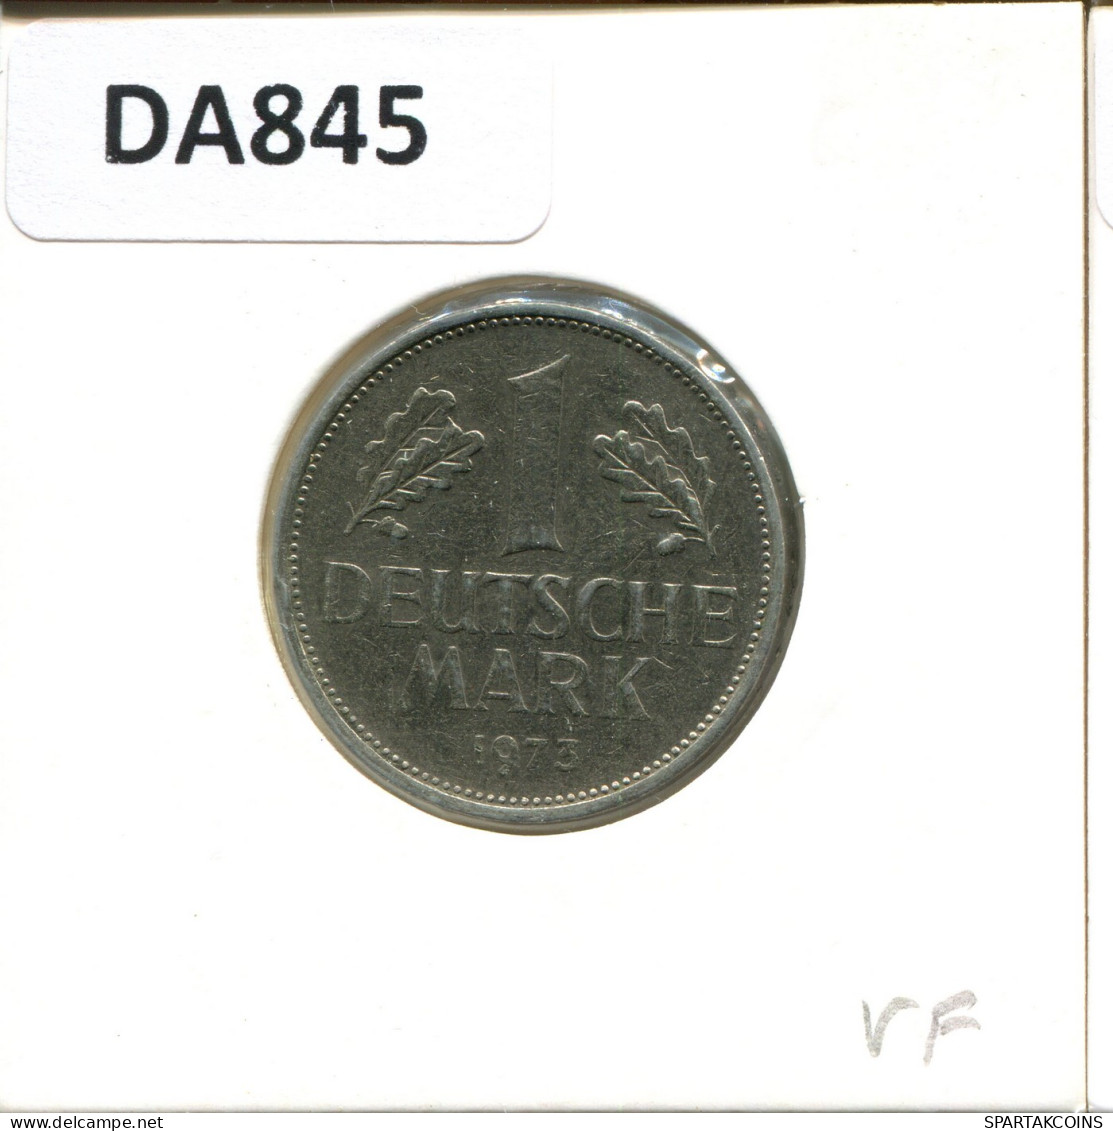 1 DM 1973 G BRD DEUTSCHLAND Münze GERMANY #DA845.D - 1 Marco